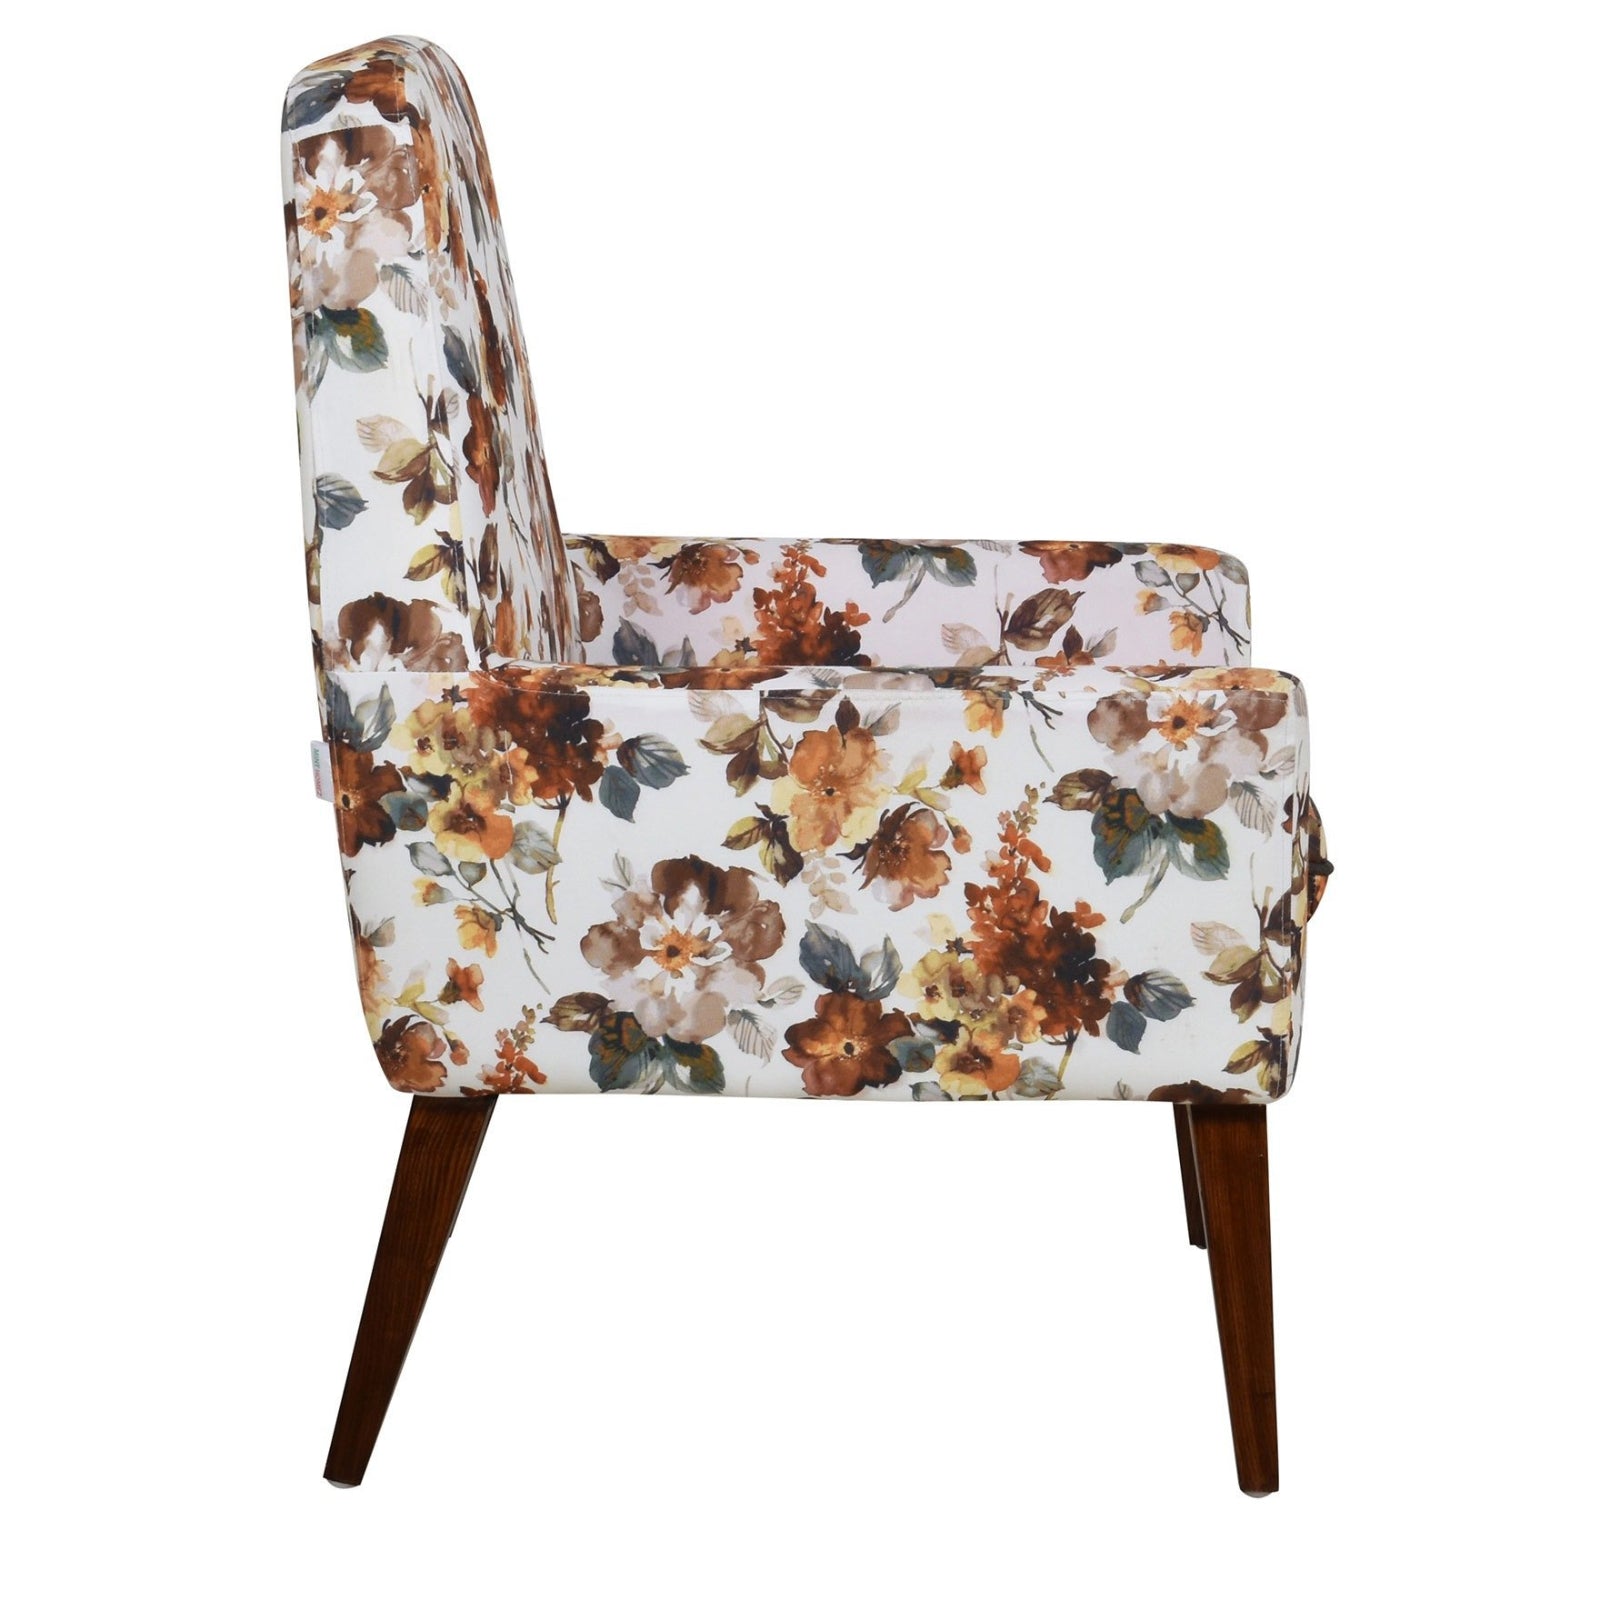 ARENA LUGO Single Seater Lounge Chair Fabric (Brown)